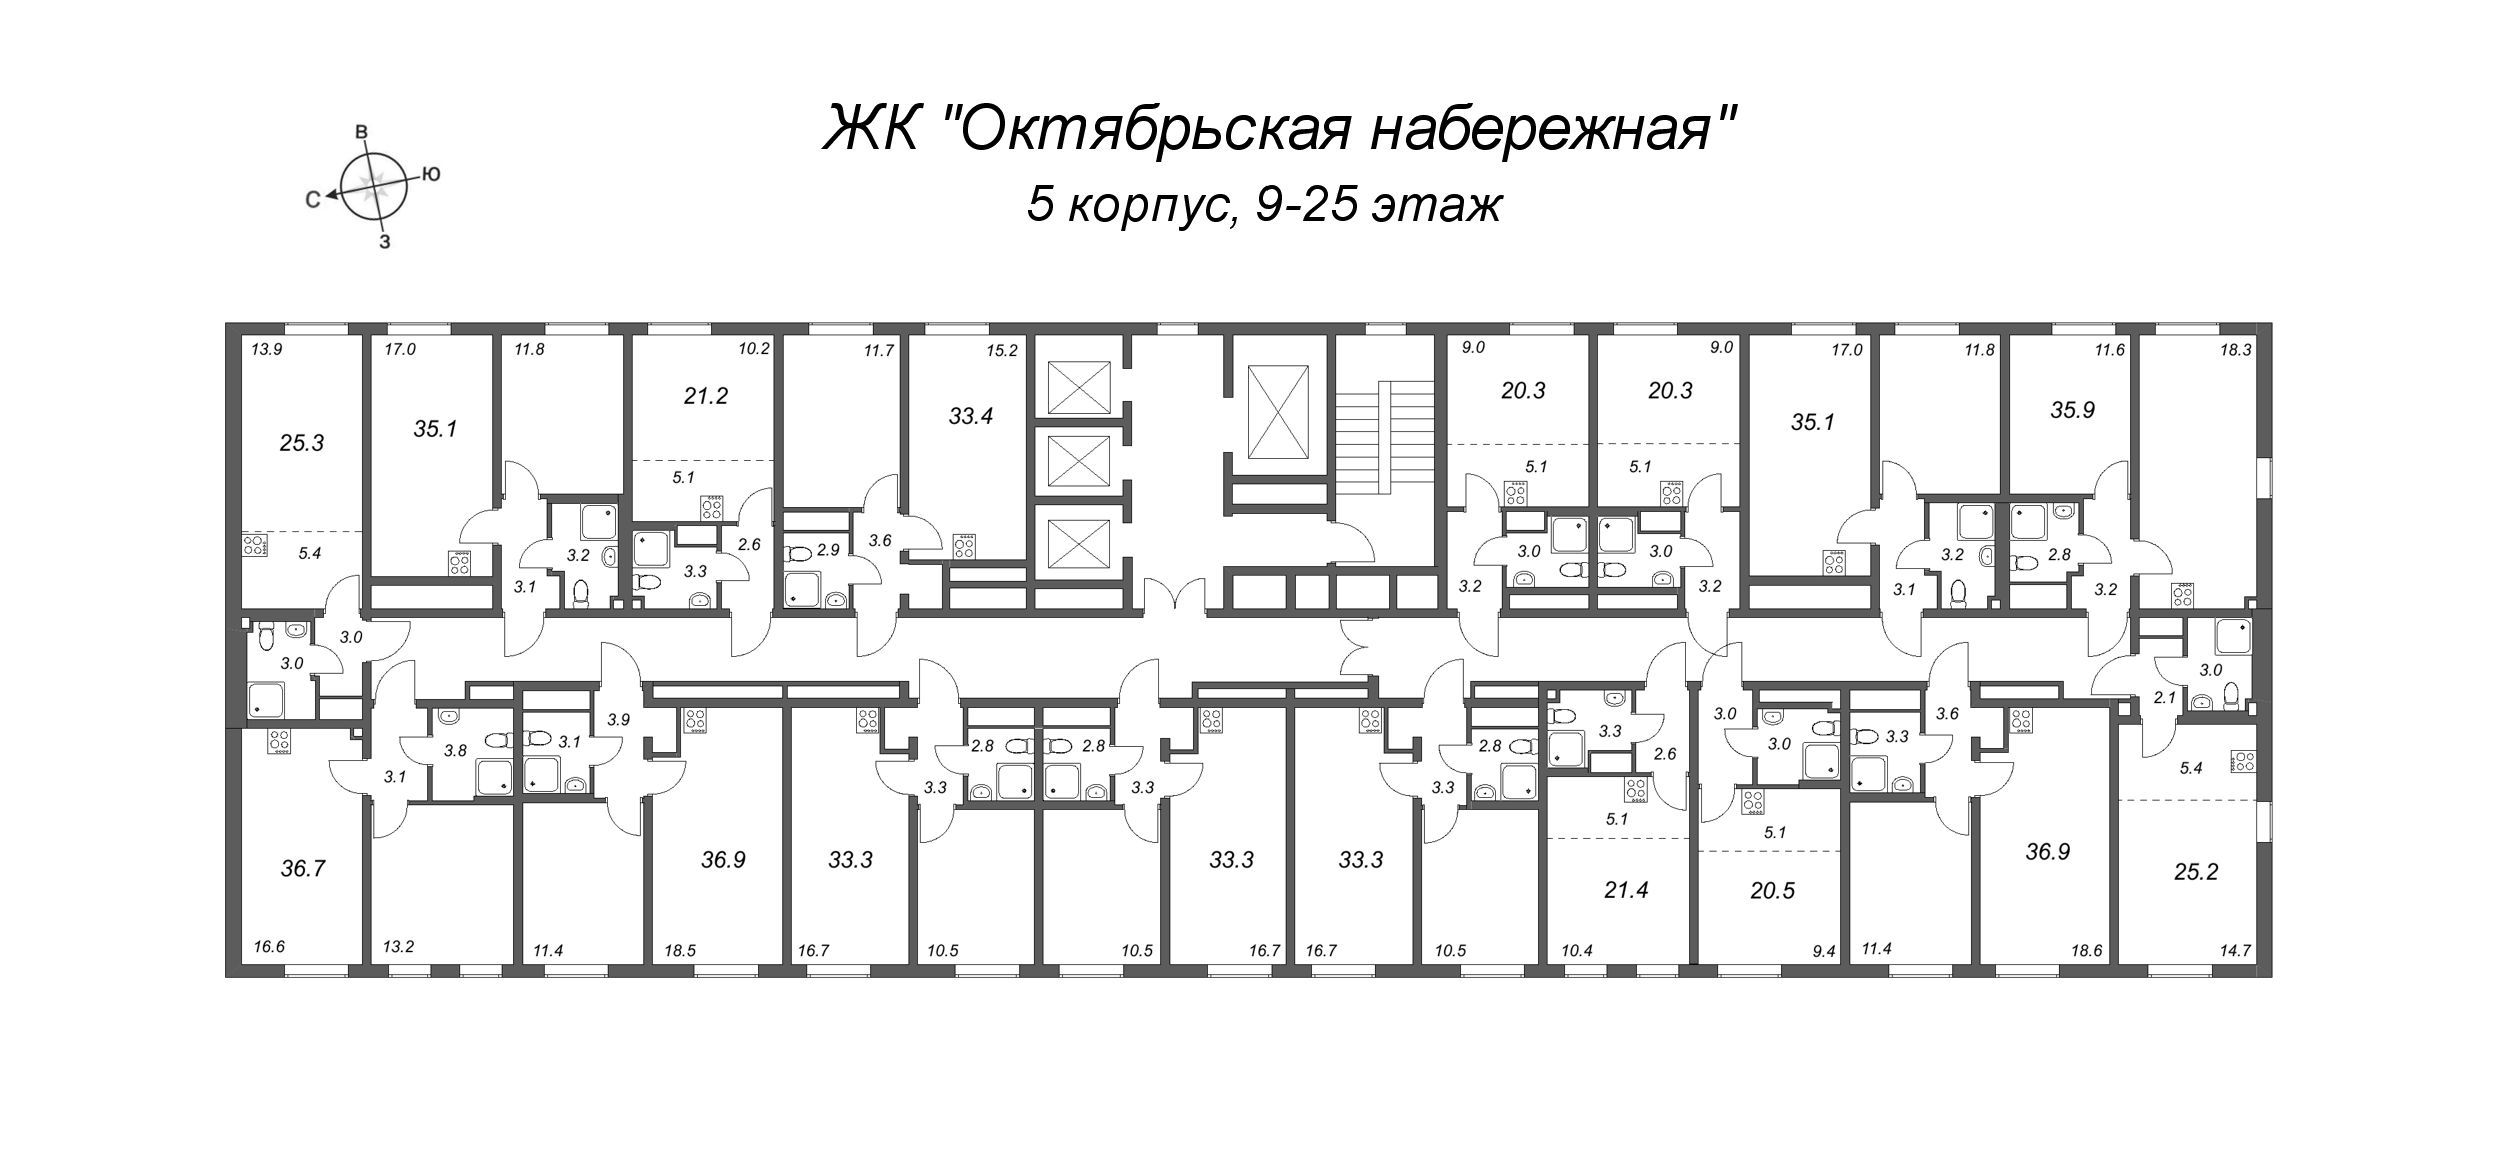 2-комнатная (Евро) квартира, 33.4 м² - планировка этажа